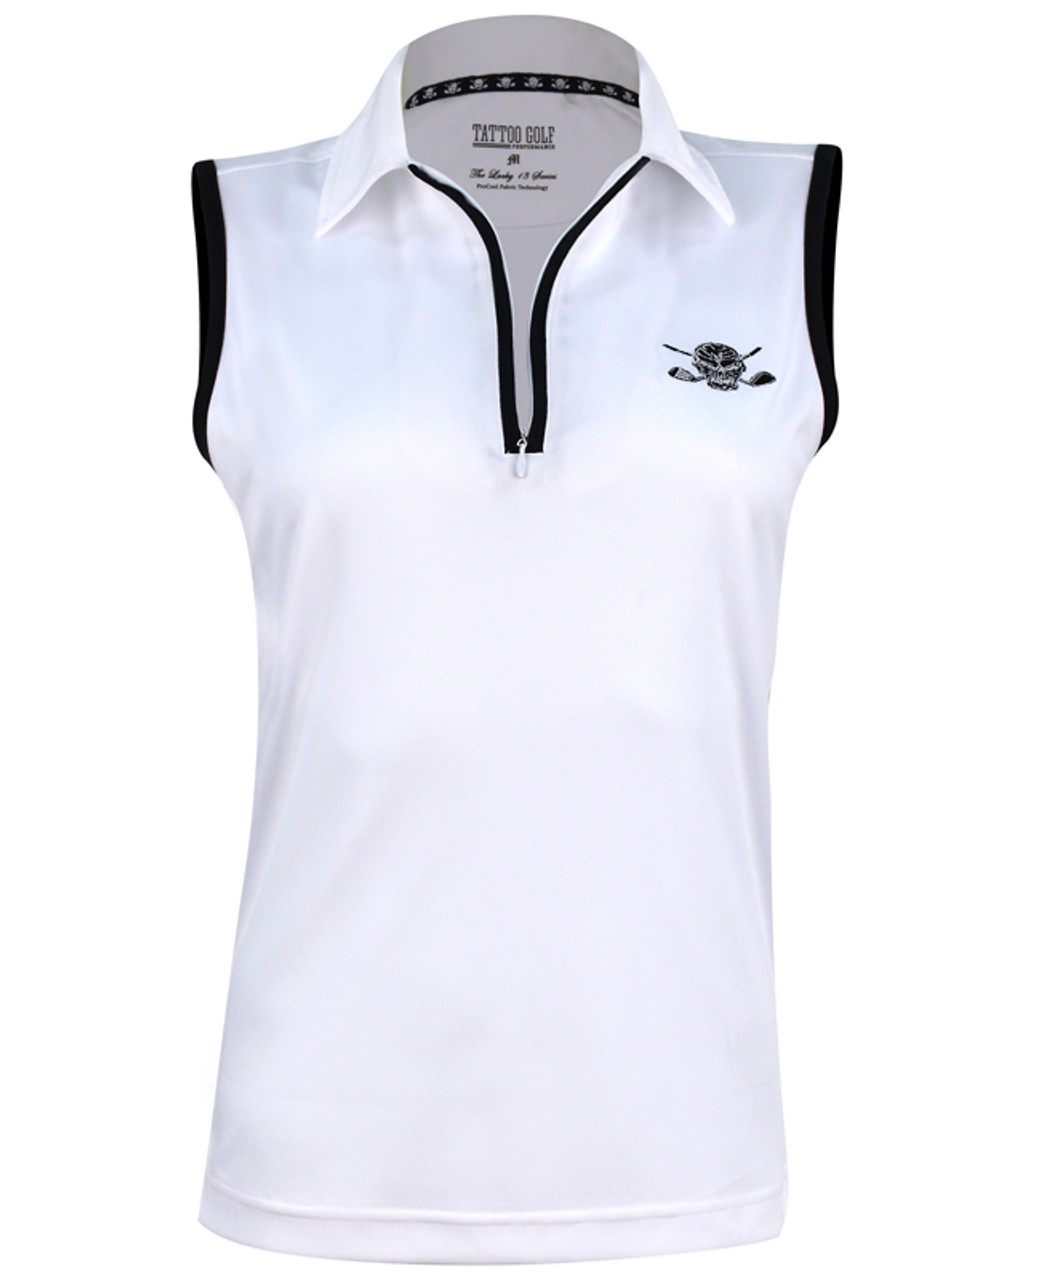 Lasfour Cool Golf Shirts For Women, Womens White Sleeveless Golf